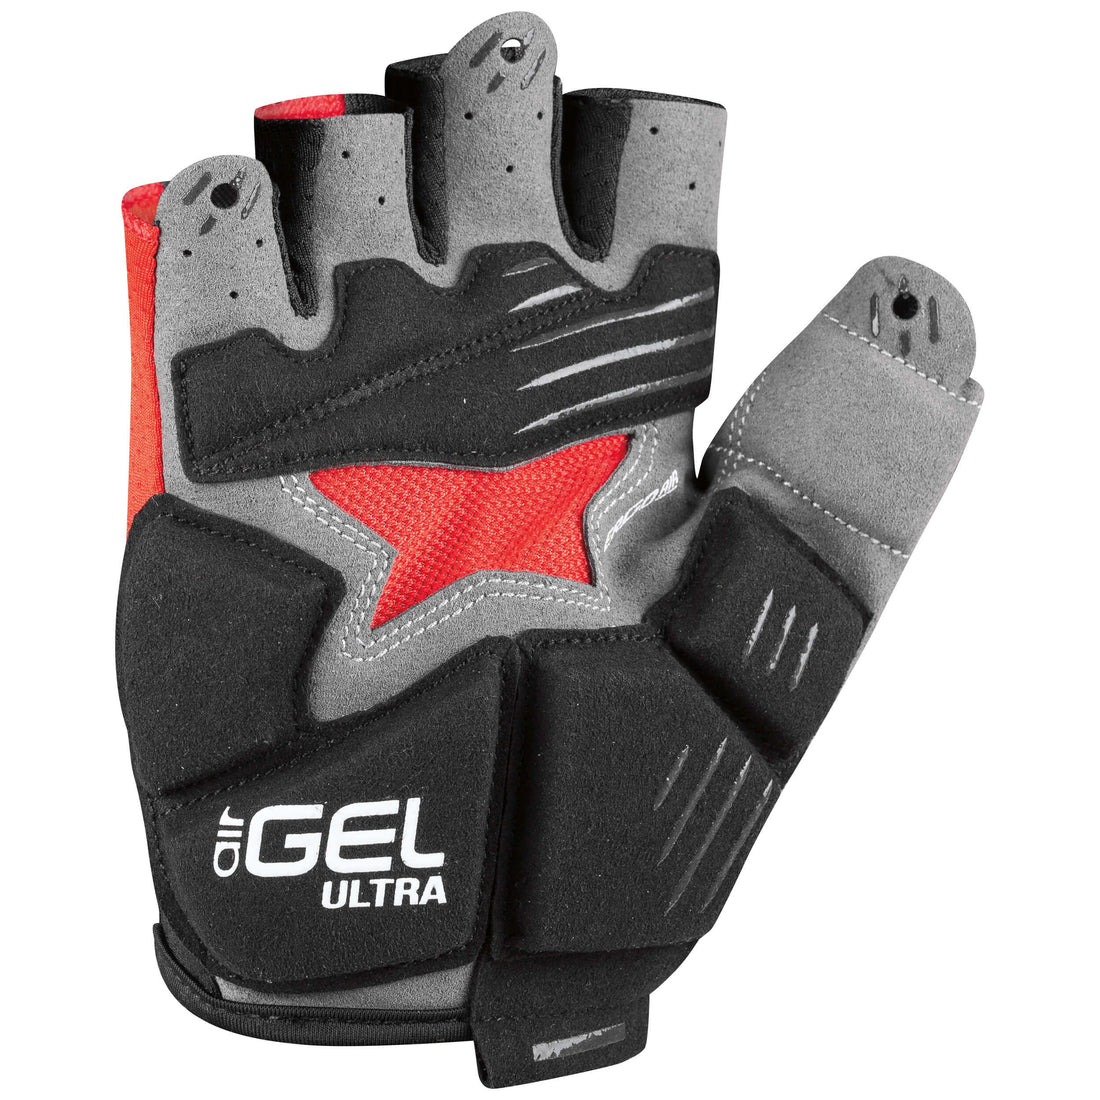 Air gel ultra cycling gloves Men